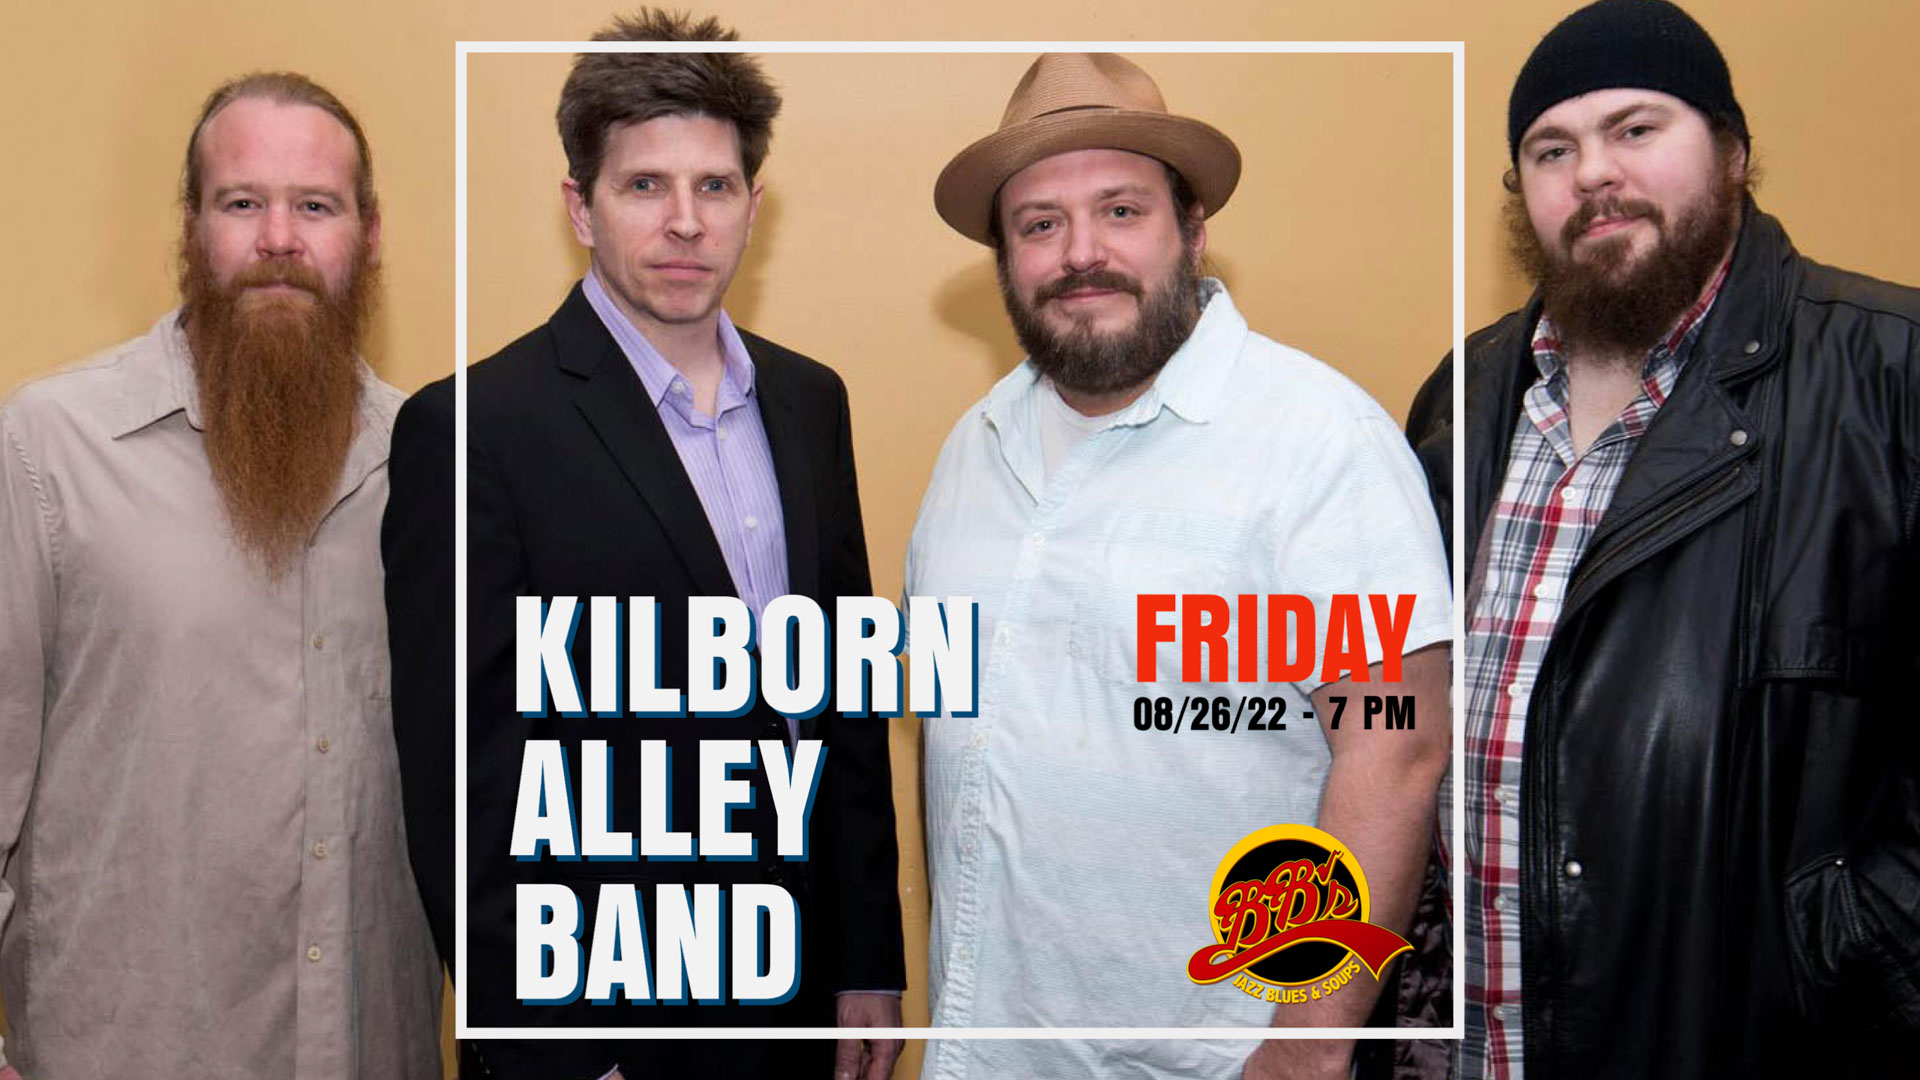 Kilborn Alley Band